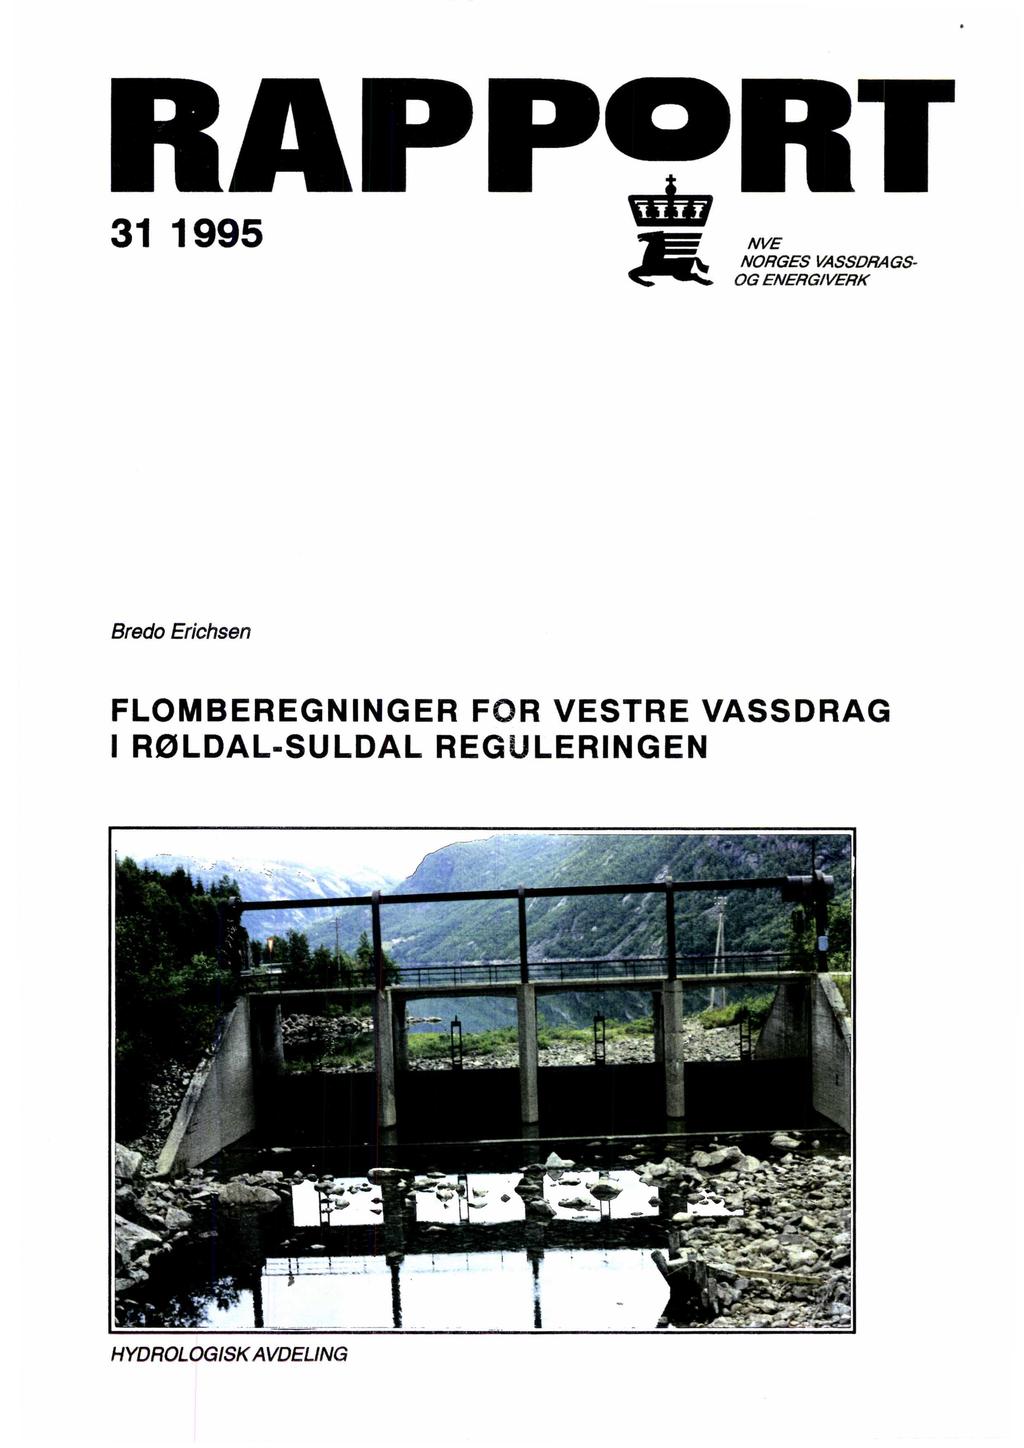 31 1995 NVE NORGES VASSDRAGS- OG ENERGIVERK BredoErichsen FLOMBEREGNINGER